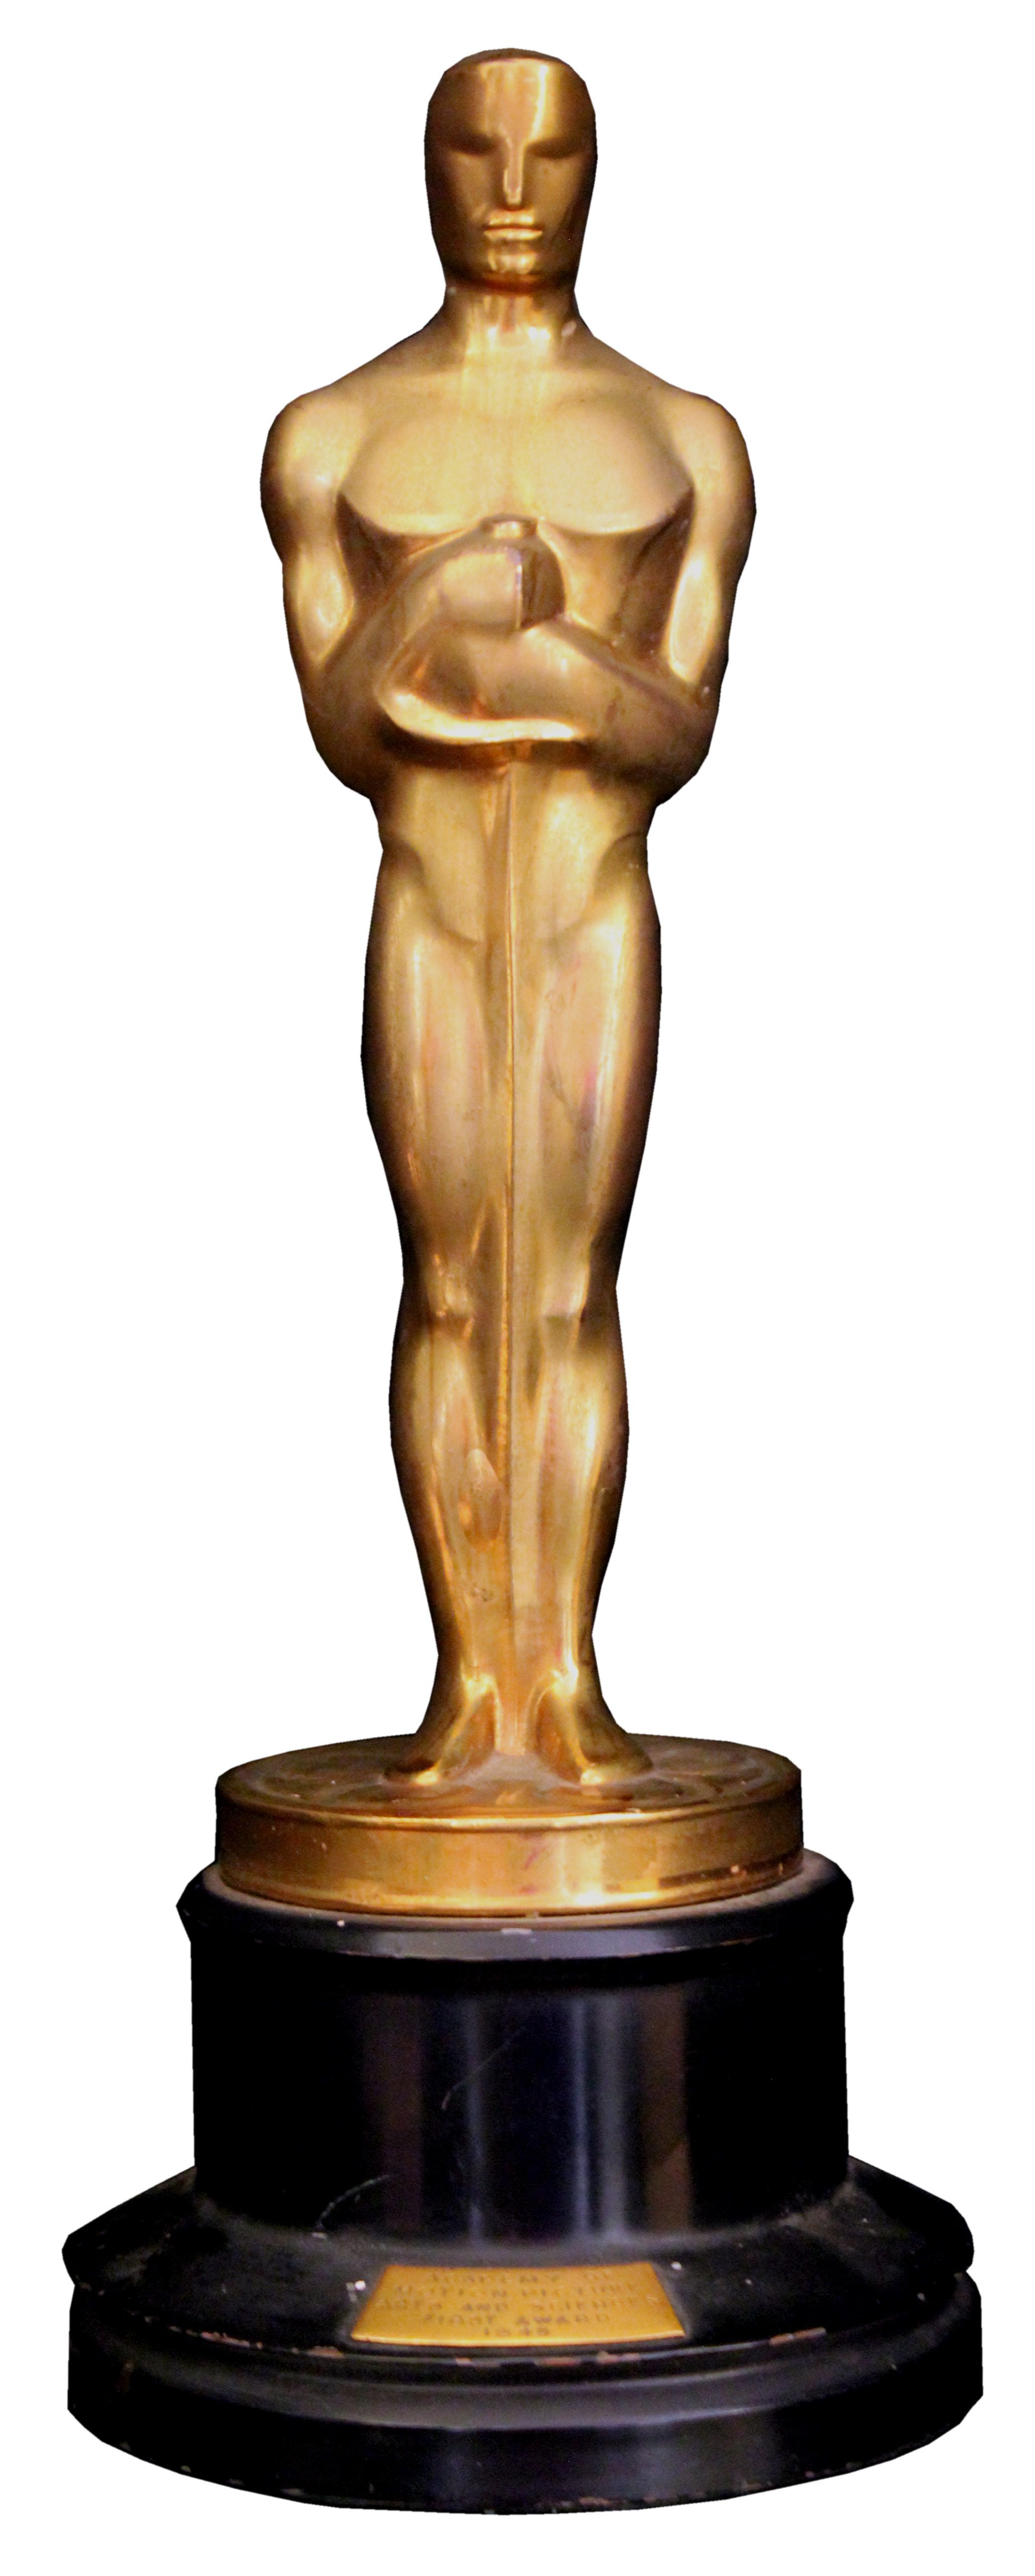 Oscar statue cliparts free download clip art jpg